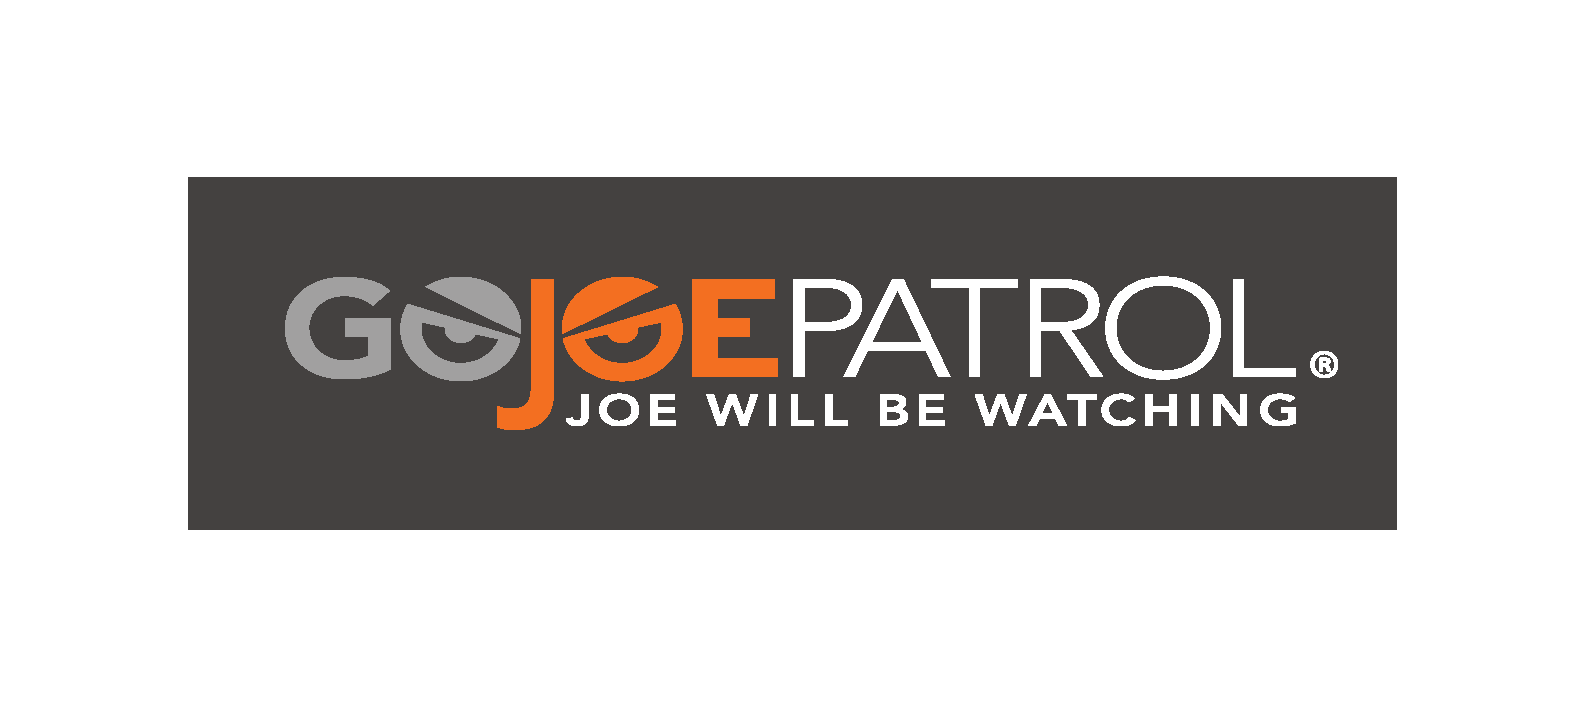 GoJoe Patrol Logo